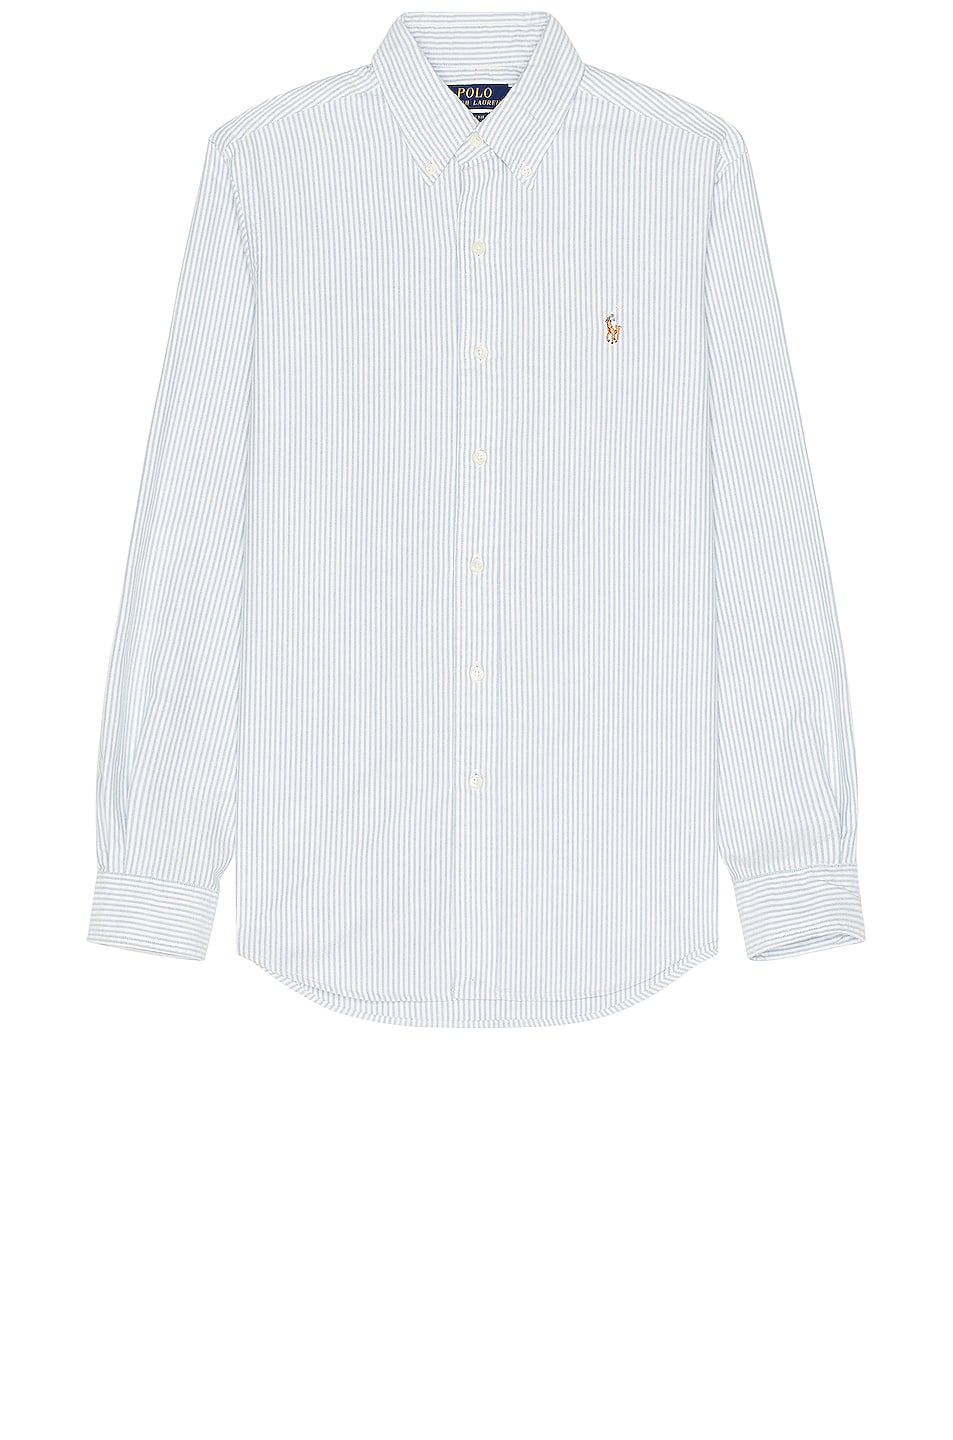 Image 1 of Polo Ralph Lauren Oxford Sport Shirt in Blue & White Stripe